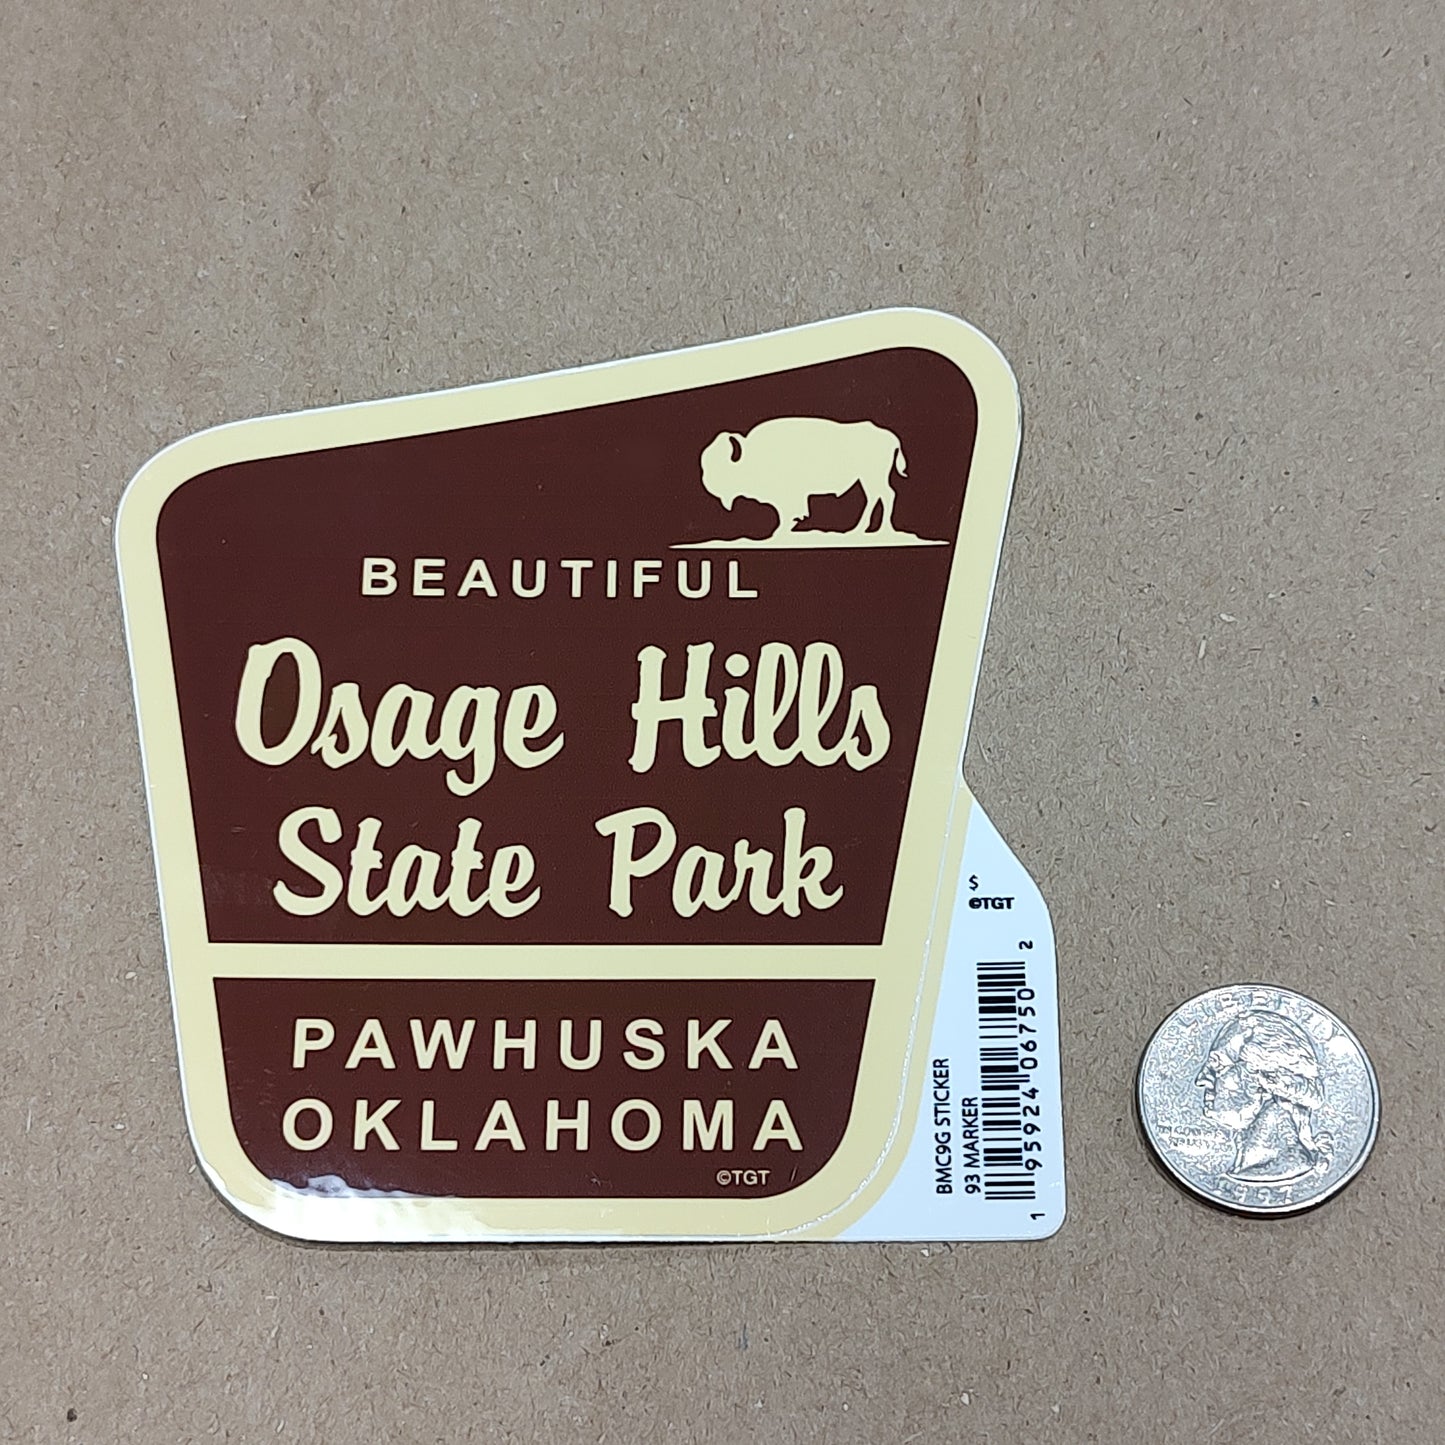 Osage Hills State Park Pawhuska, OK - sticker